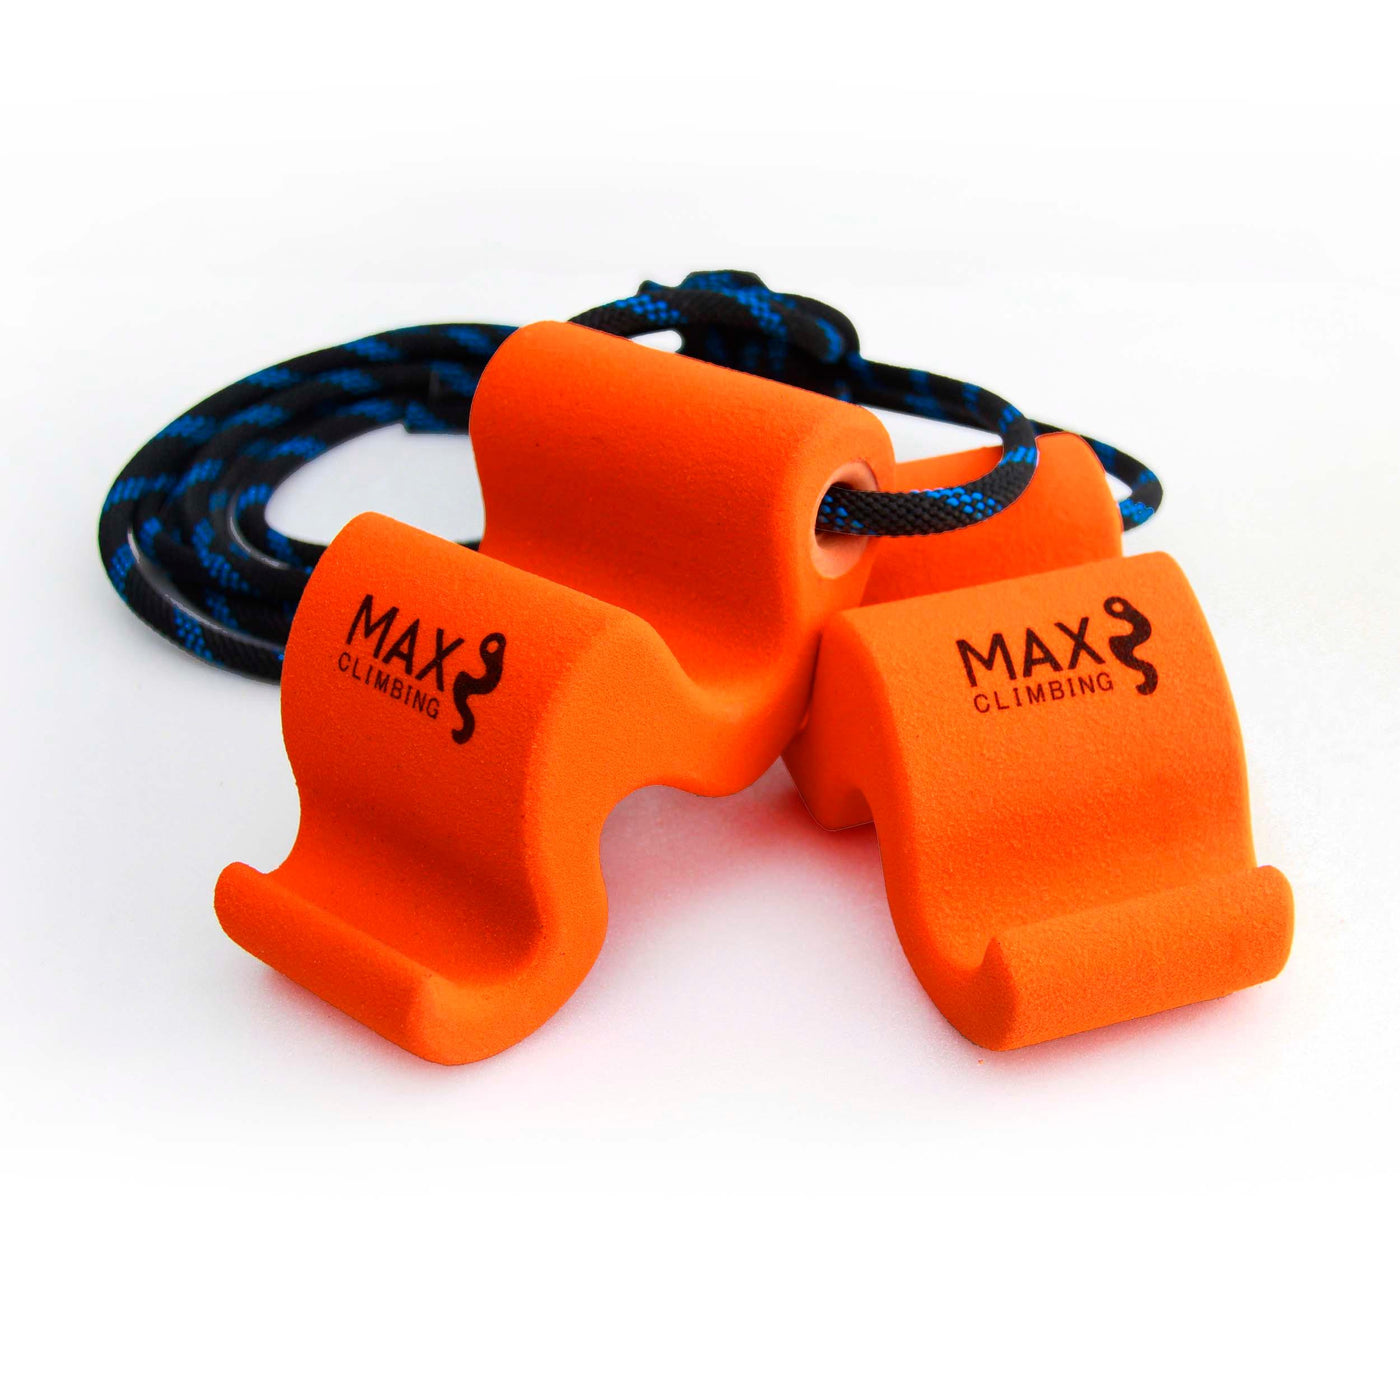 Maxgrip - Max Climbing - training tool - climbing orange